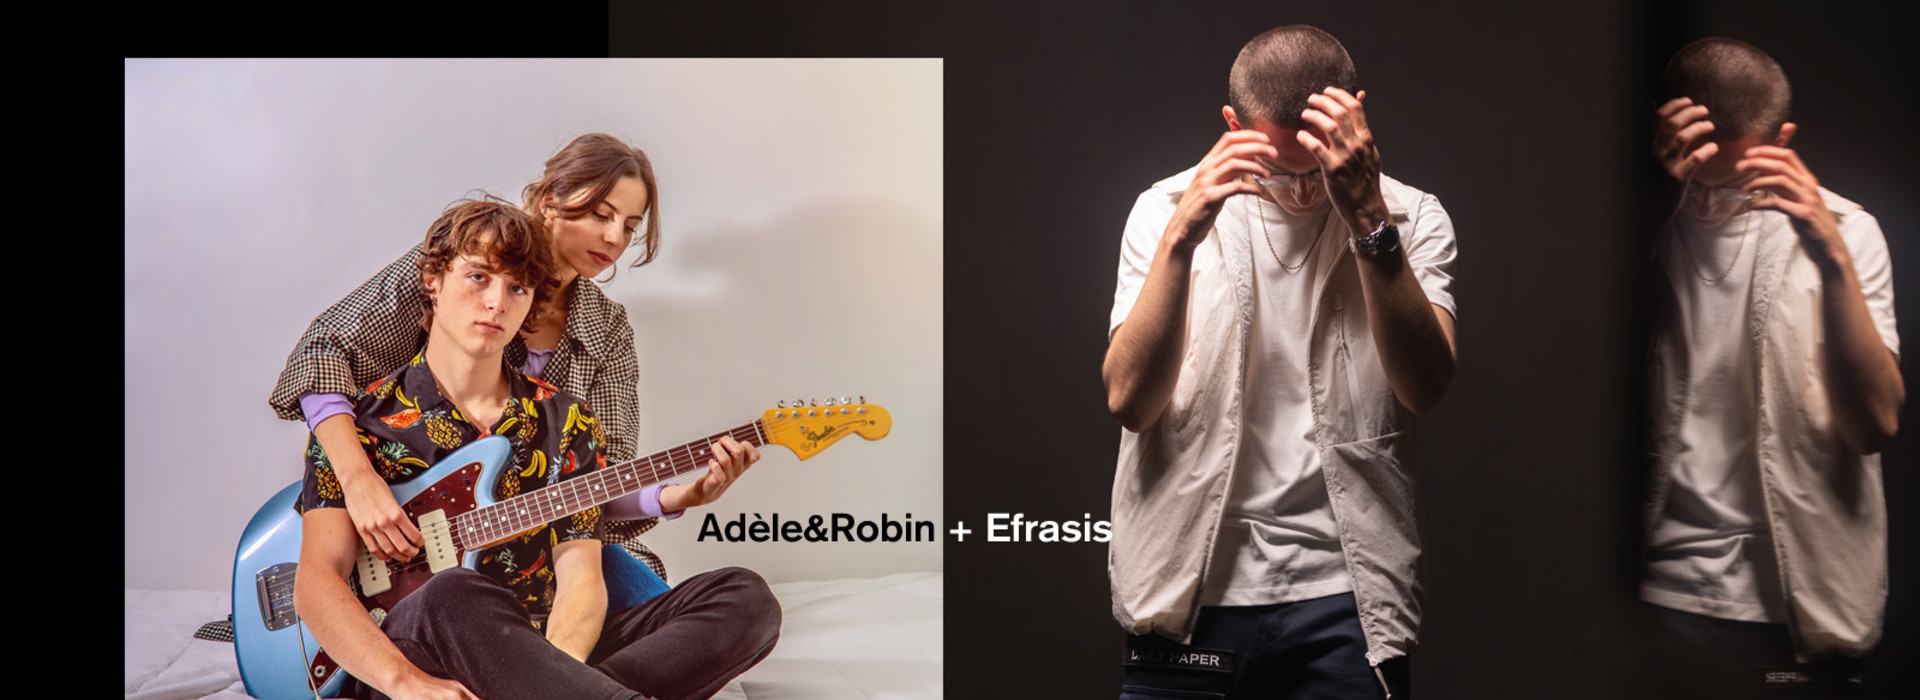 Co-plateau musique ADELE & ROBIN + EFRASIS